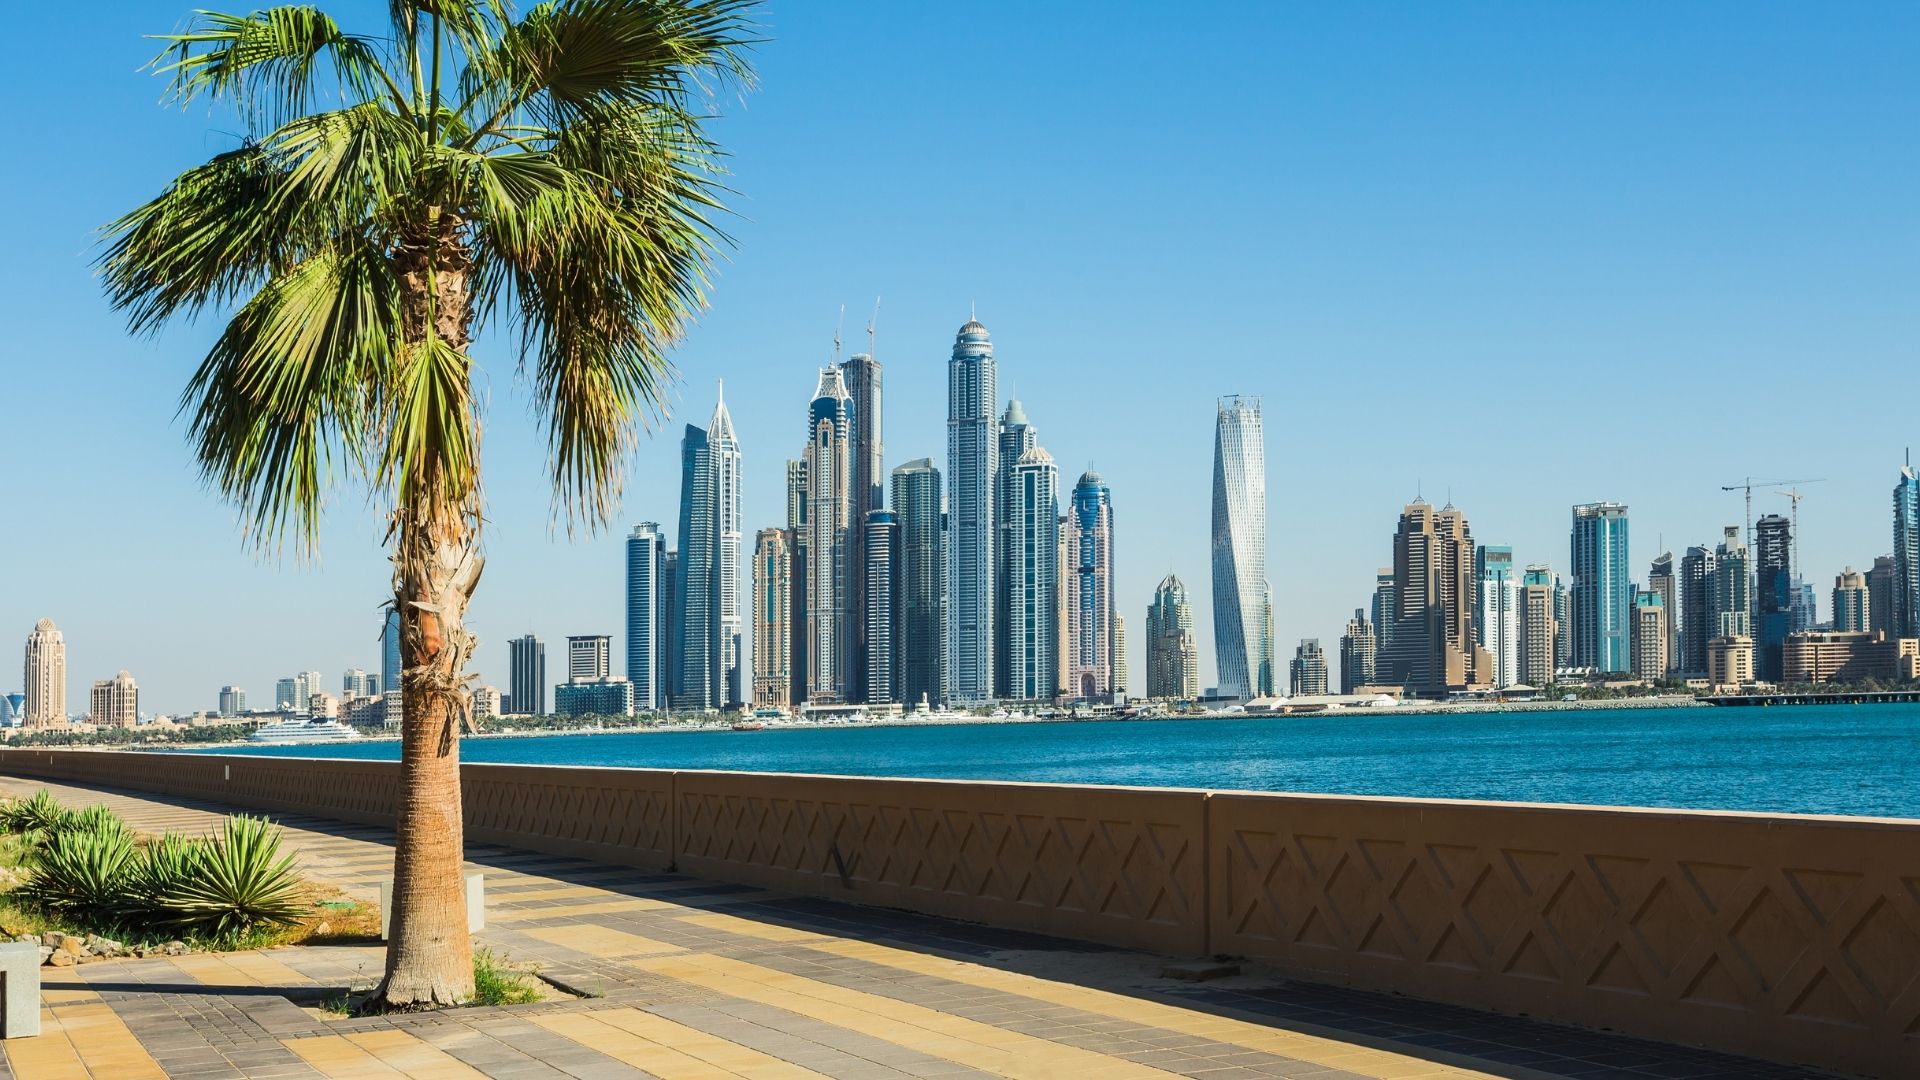 Dubai Mainland vs Free Zone: Which is Better?